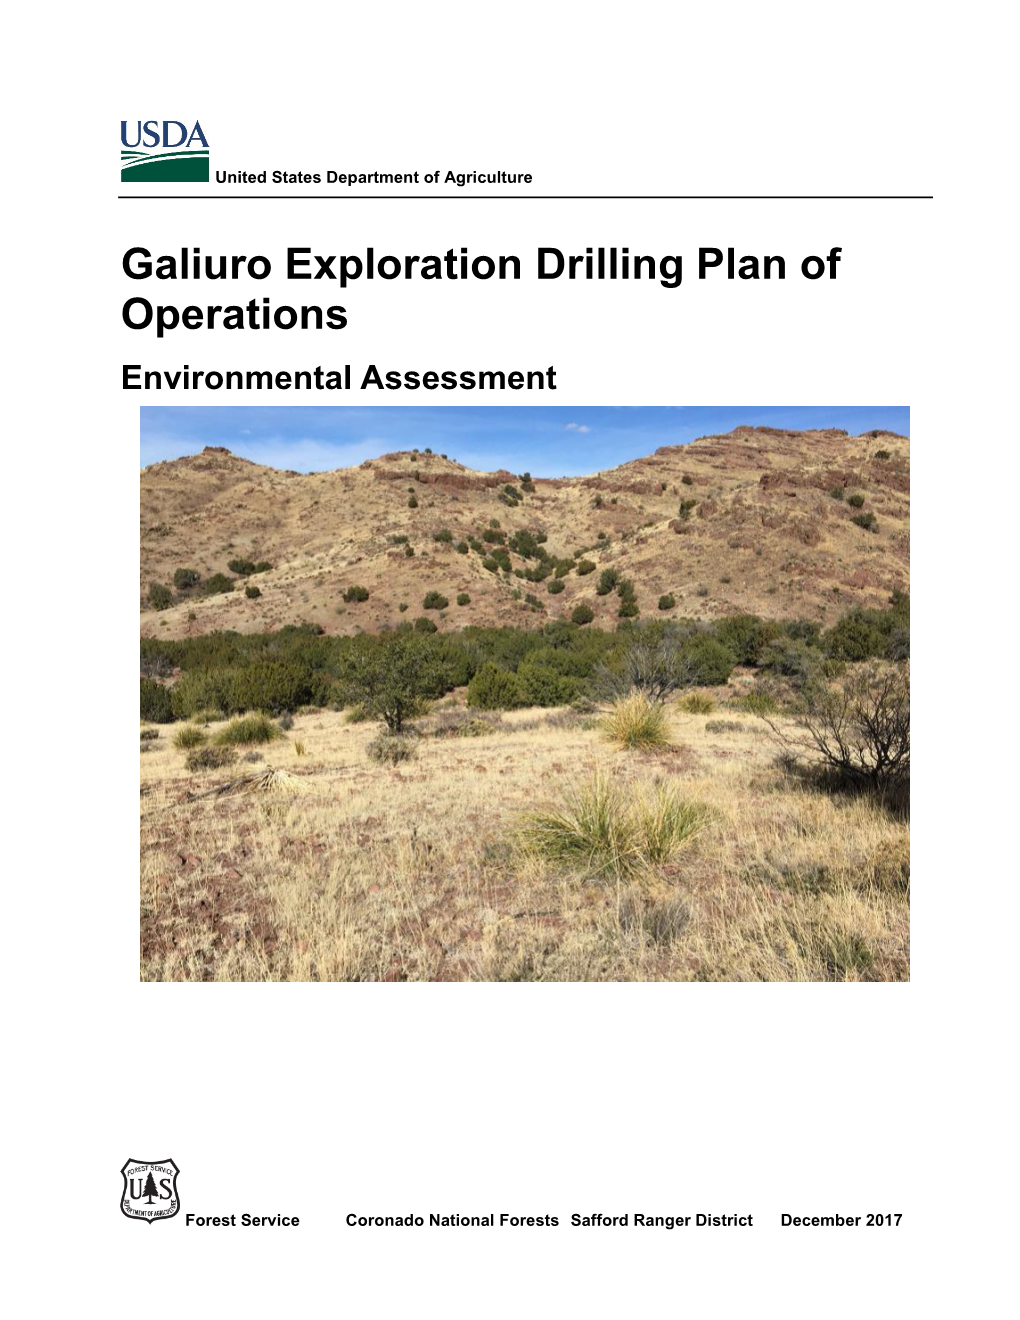 Galiuro Exploration Drilling Plan of Operations Environmental Assessment